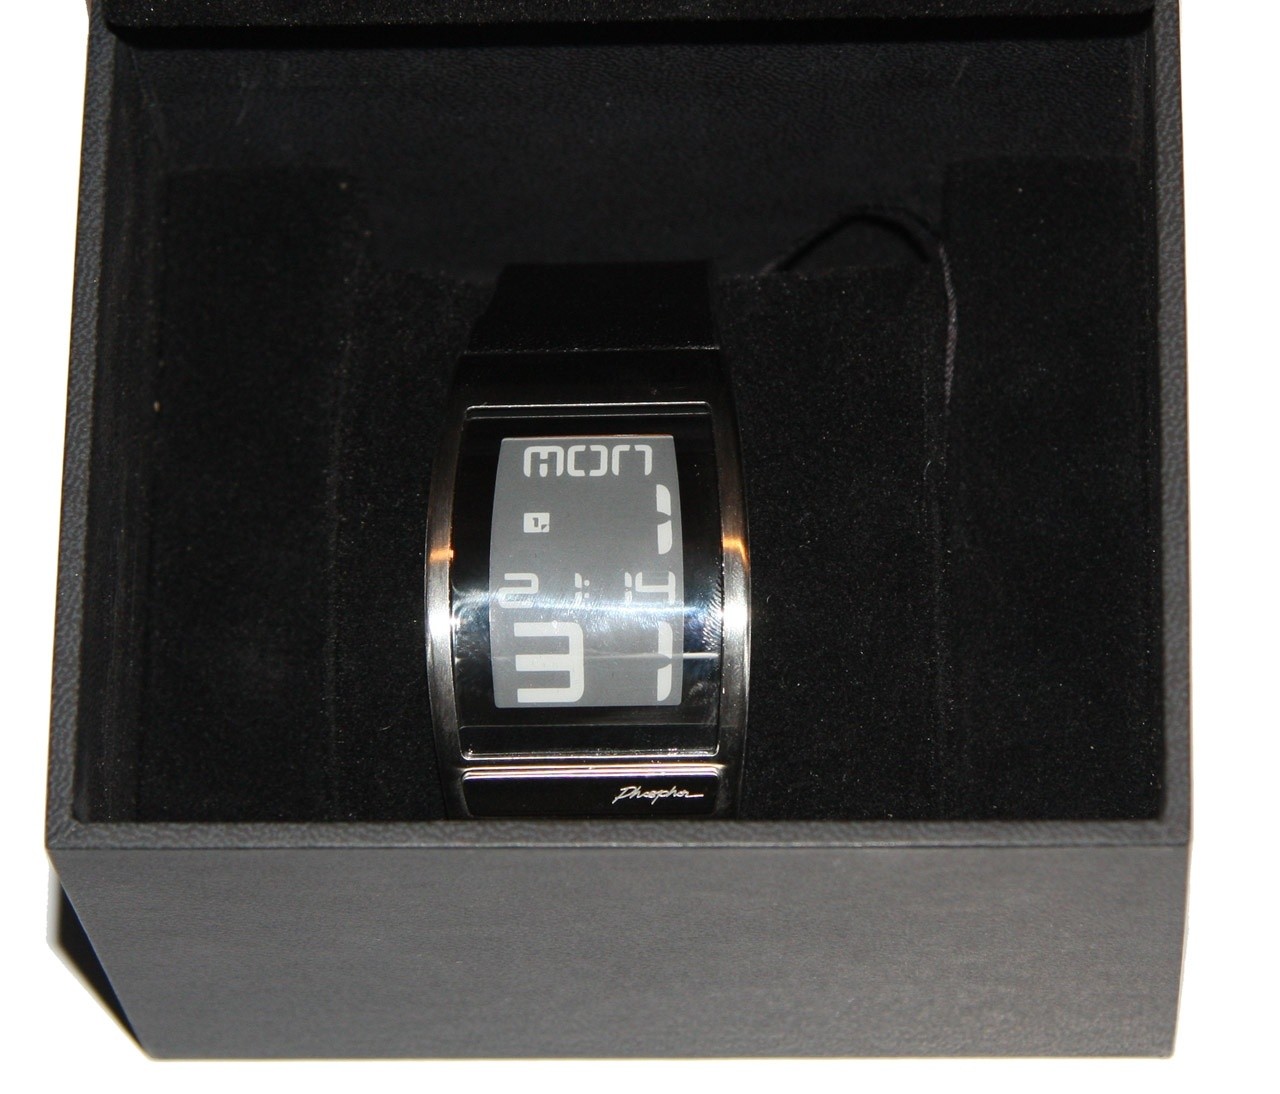 Phosphor Reveal MD004L Watch | Reloj de colores, Reloj, Relojes de marca